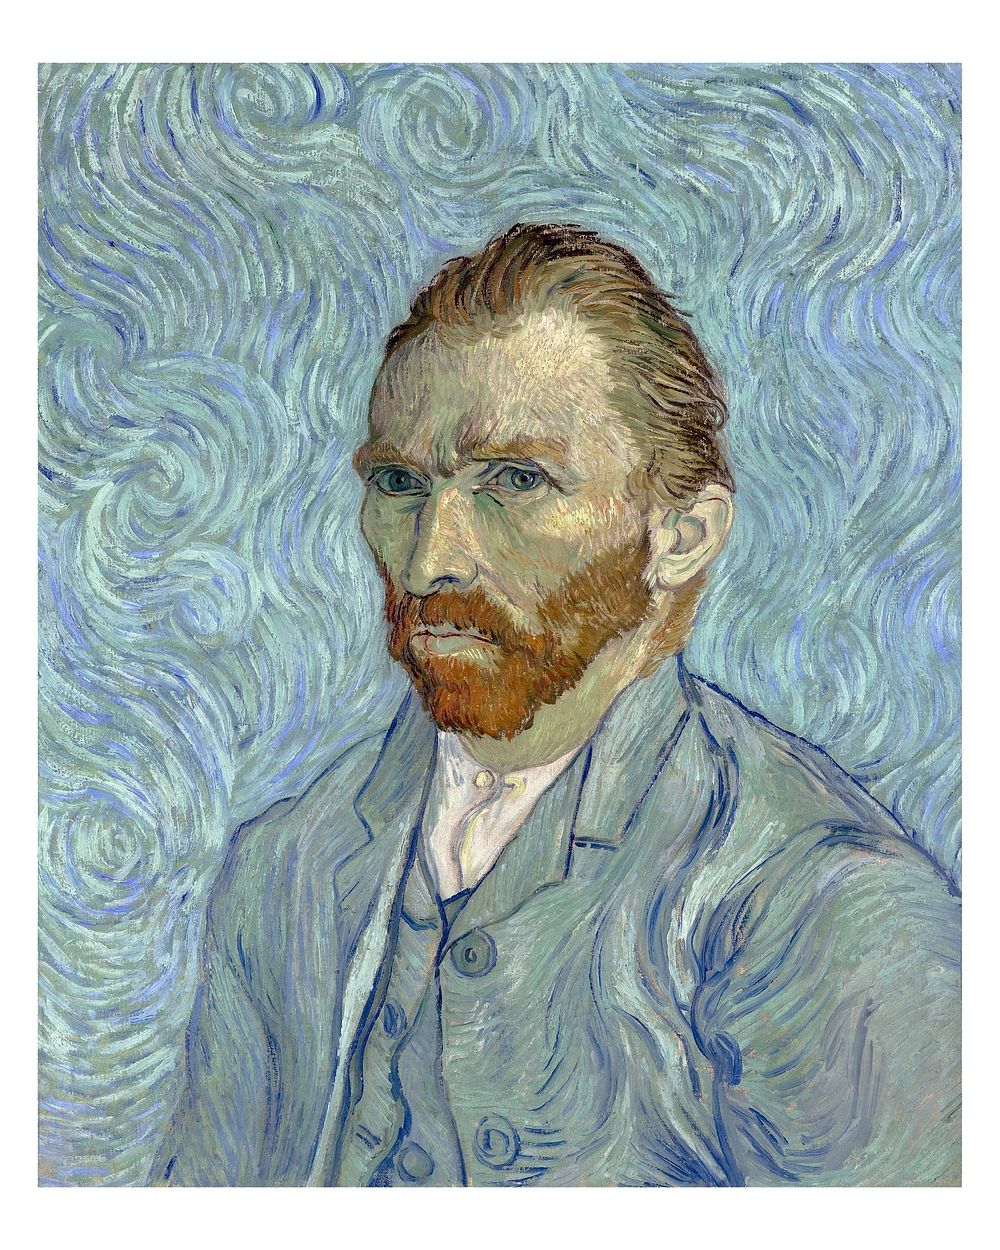 Van Gogh Self-Portrait art print, famous painting wall decor.